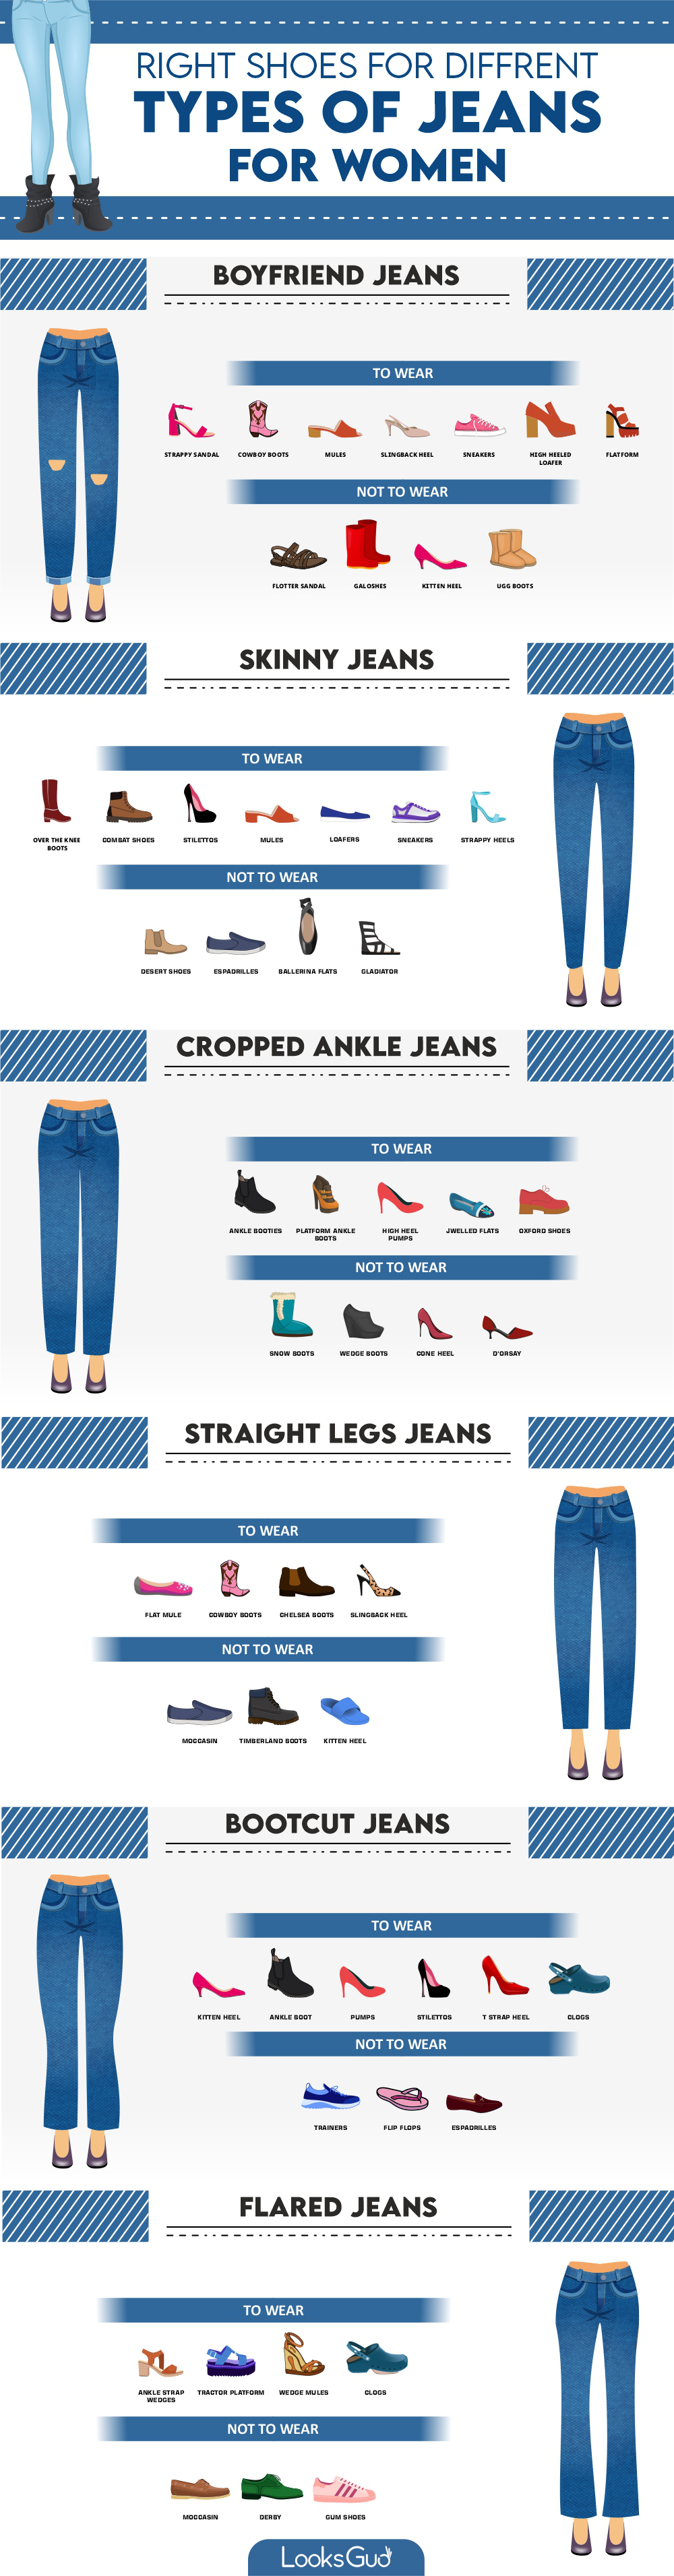 footwear to wear with jeans womens